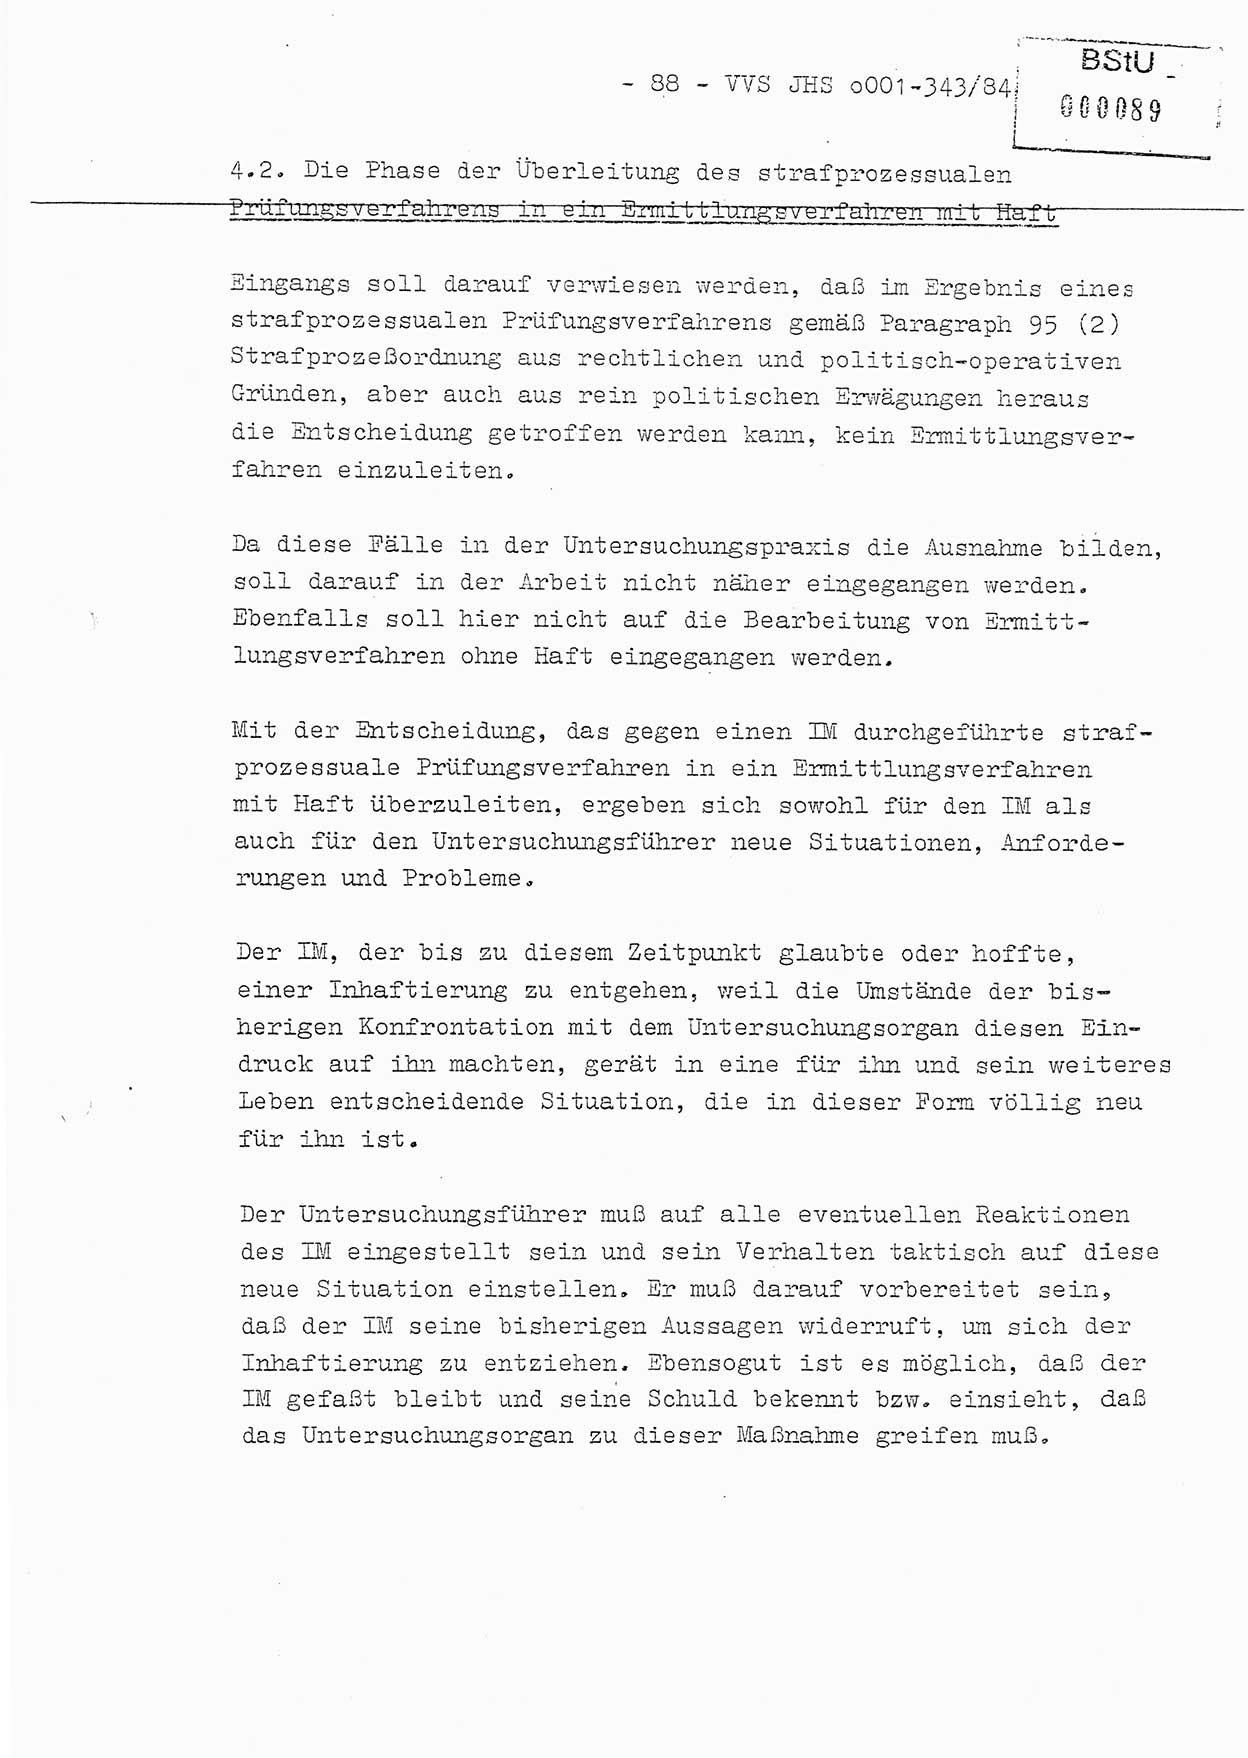 Diplomarbeit, Oberleutnant Bernd Michael (HA Ⅸ/5), Oberleutnant Peter Felber (HA IX/5), Ministerium für Staatssicherheit (MfS) [Deutsche Demokratische Republik (DDR)], Juristische Hochschule (JHS), Vertrauliche Verschlußsache (VVS) o001-343/84, Potsdam 1985, Seite 88 (Dipl.-Arb. MfS DDR JHS VVS o001-343/84 1985, S. 88)